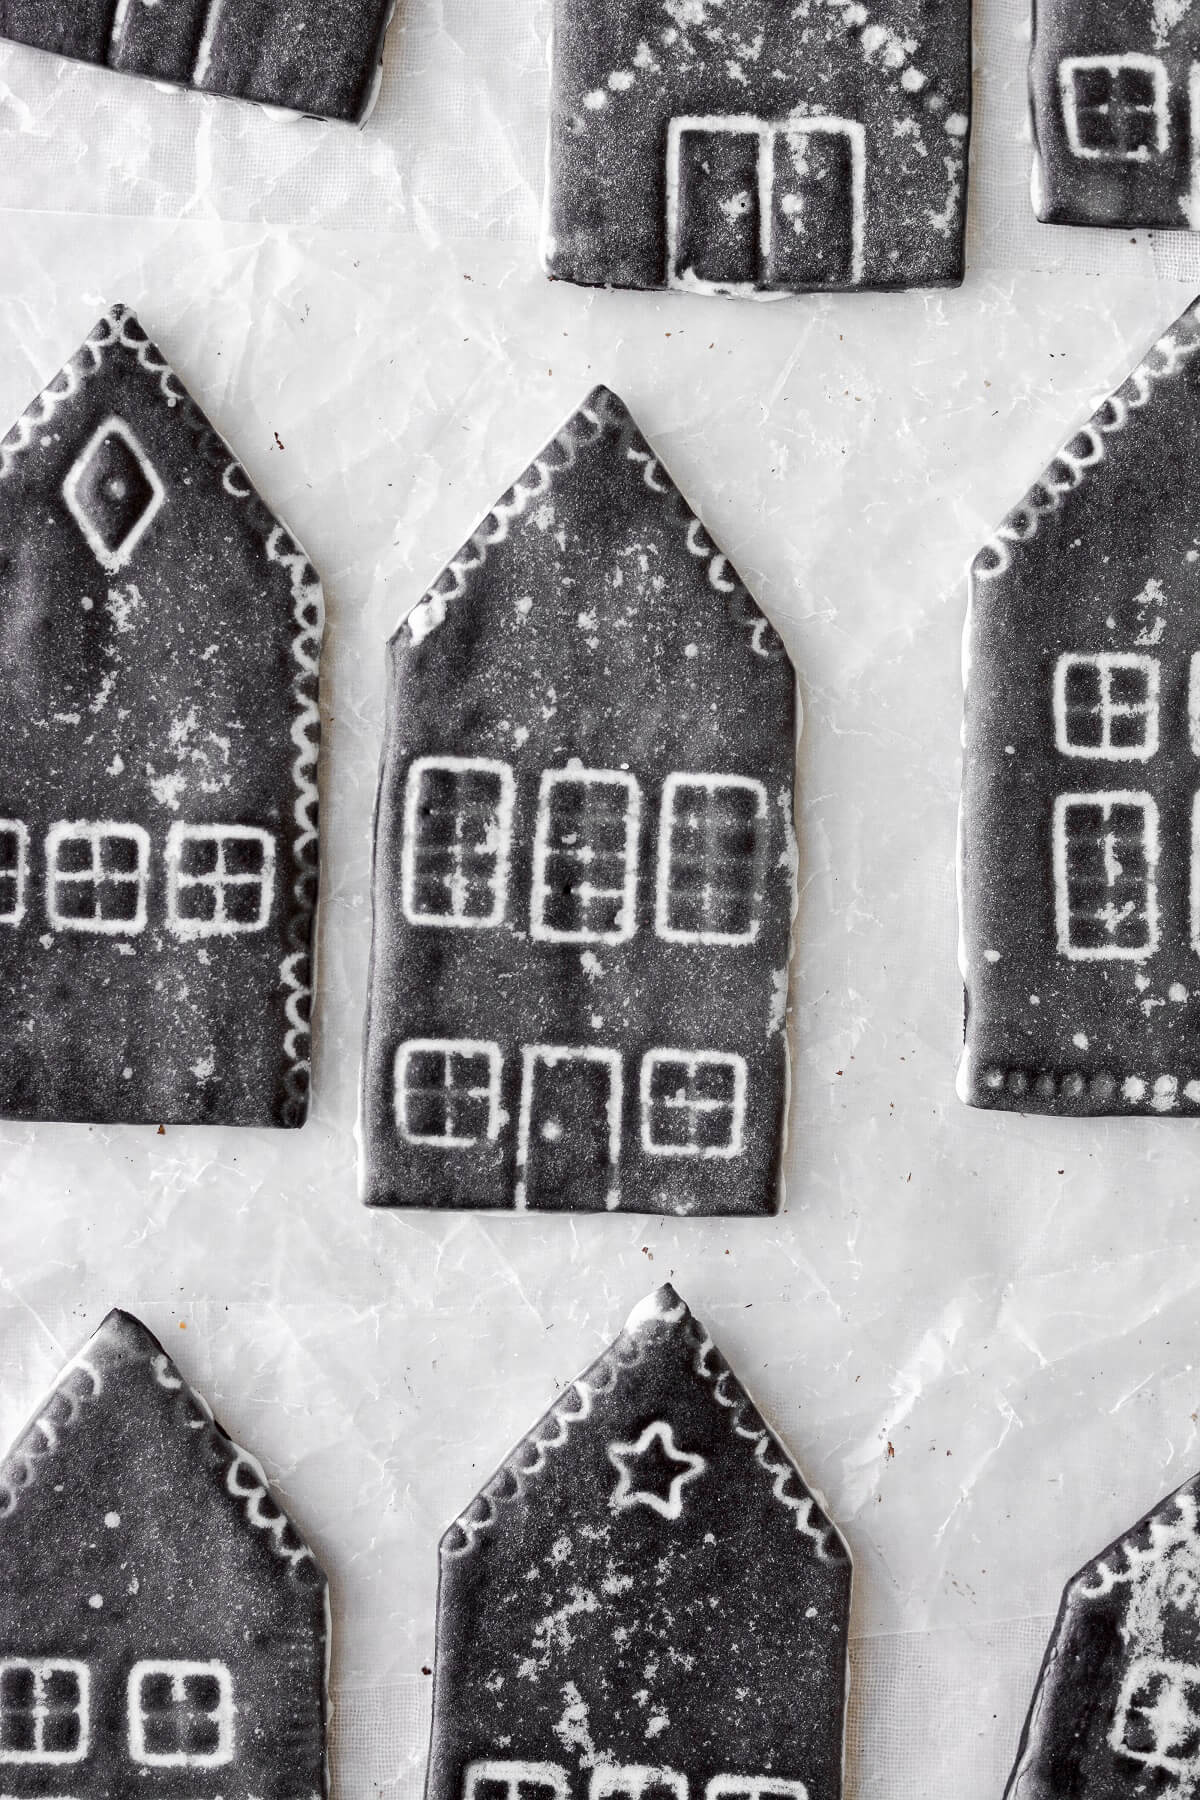 Iced chocolate sugar cookie houses.